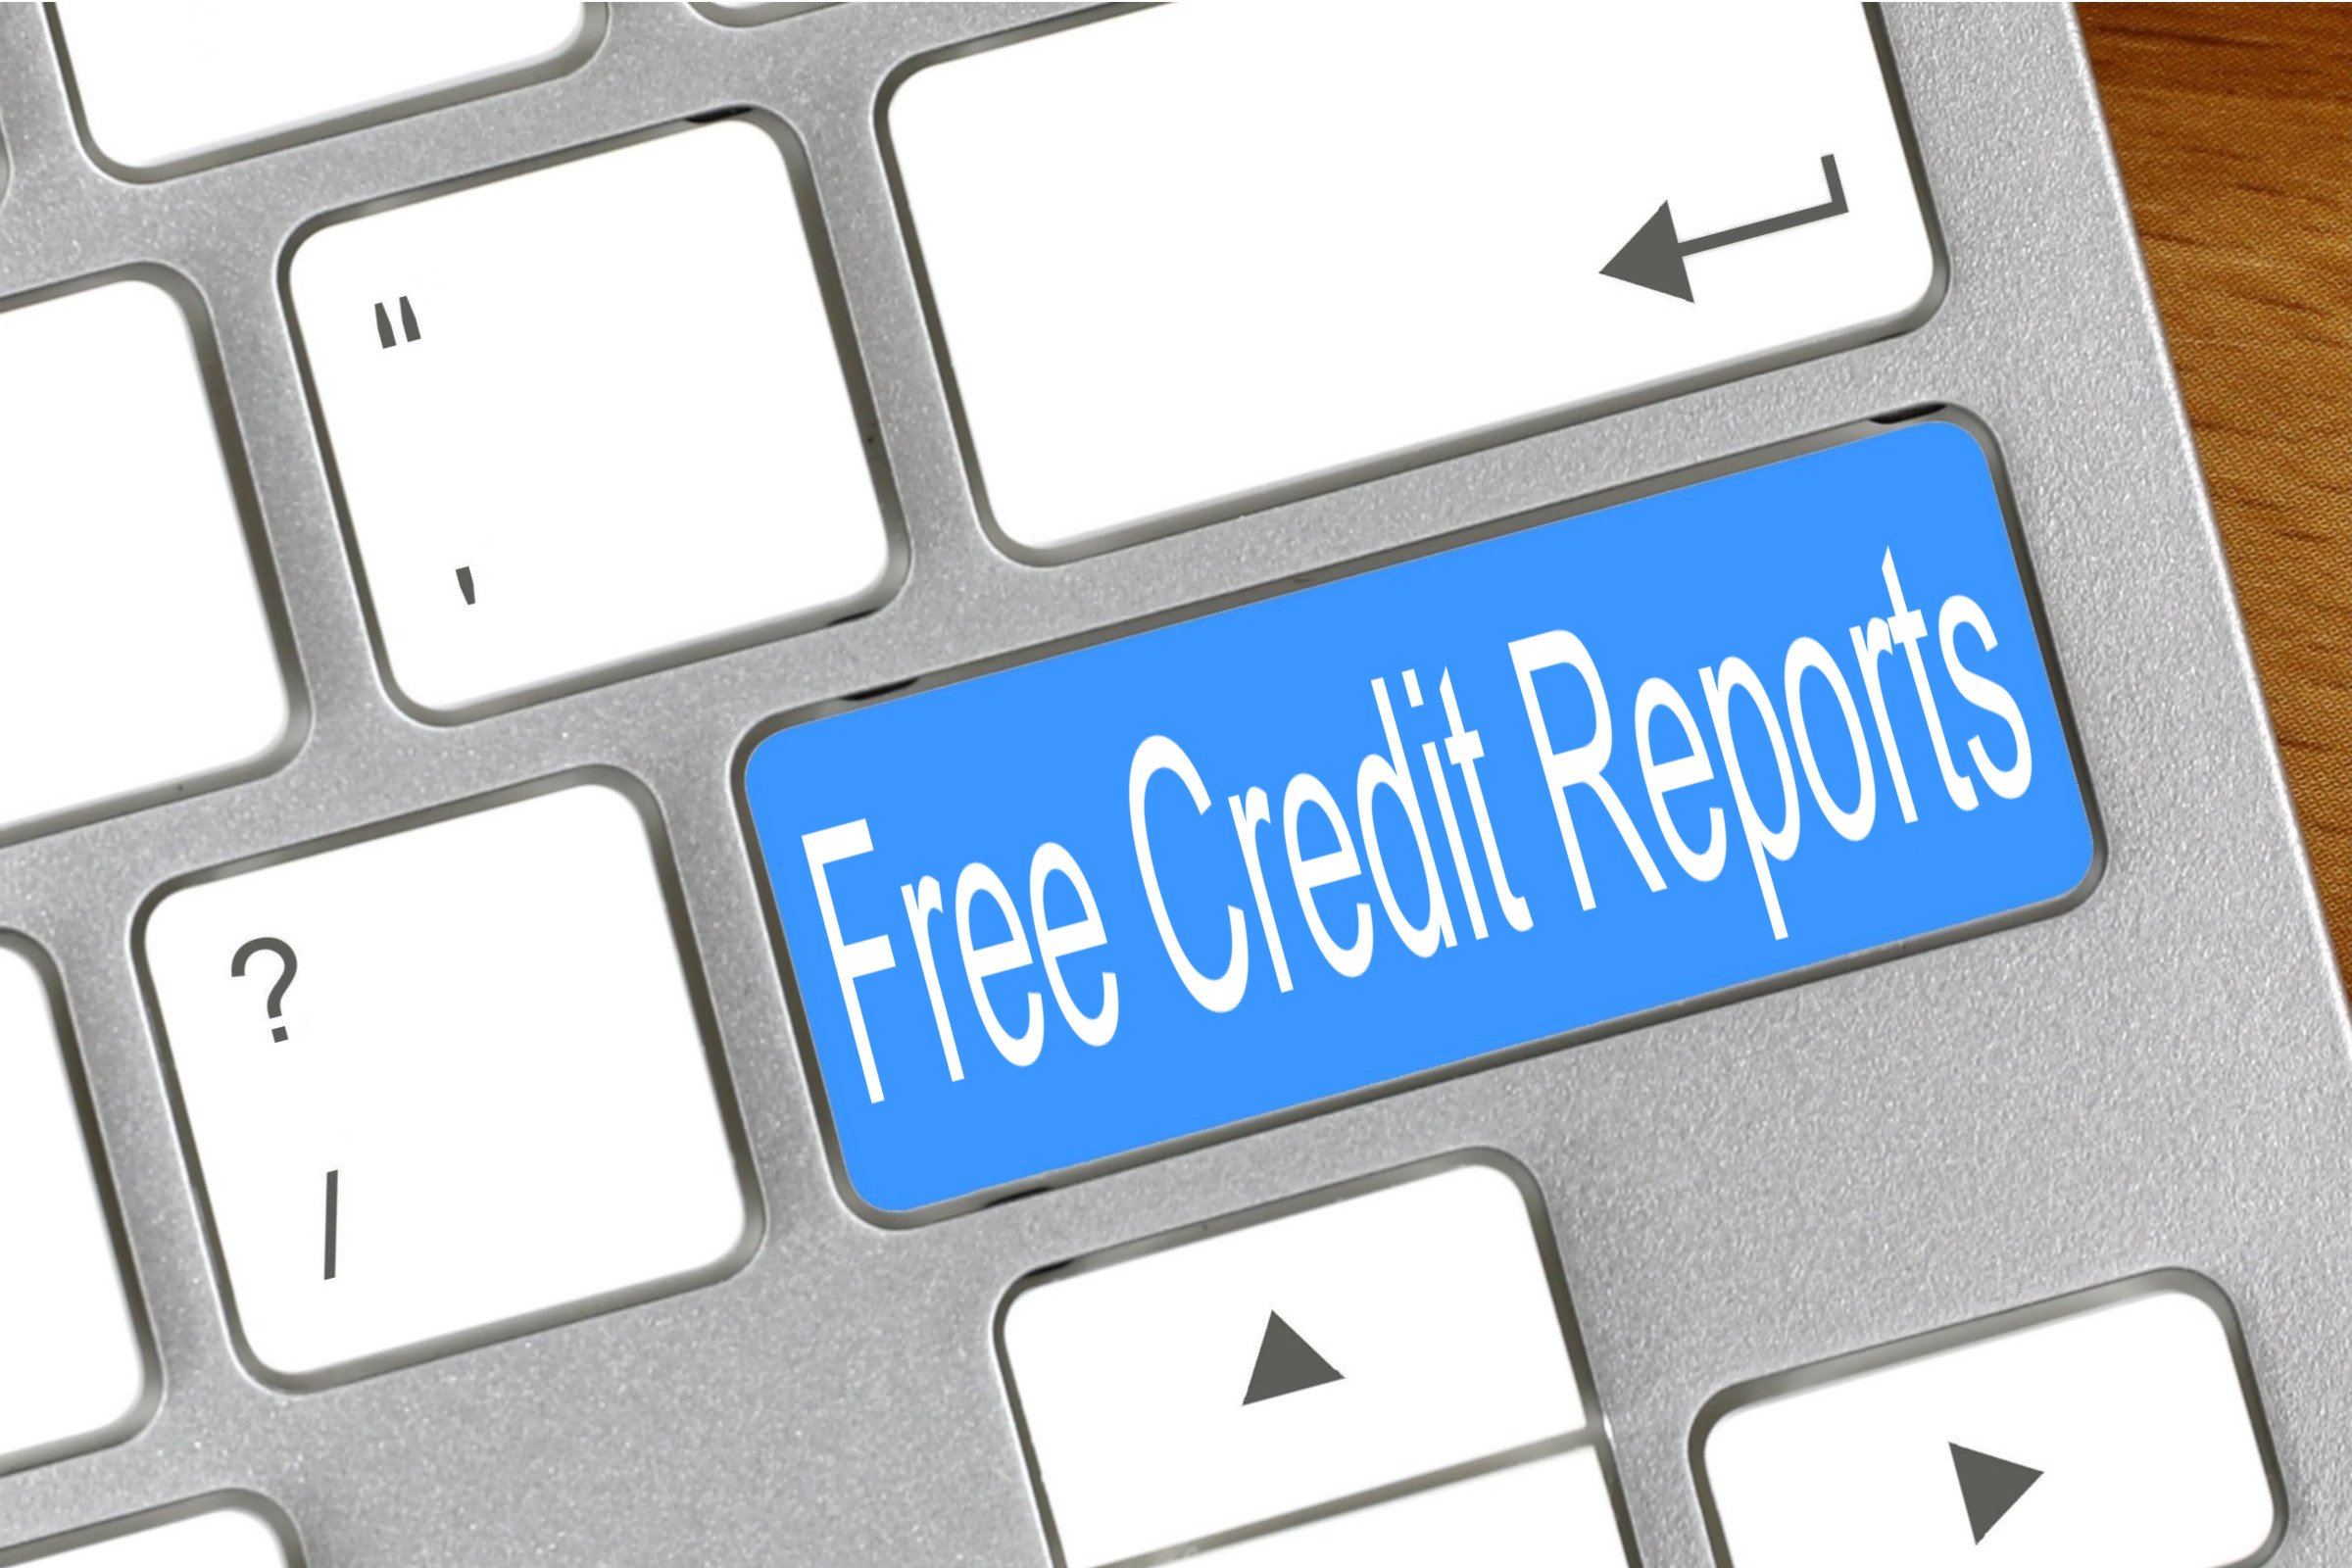 free credit reports